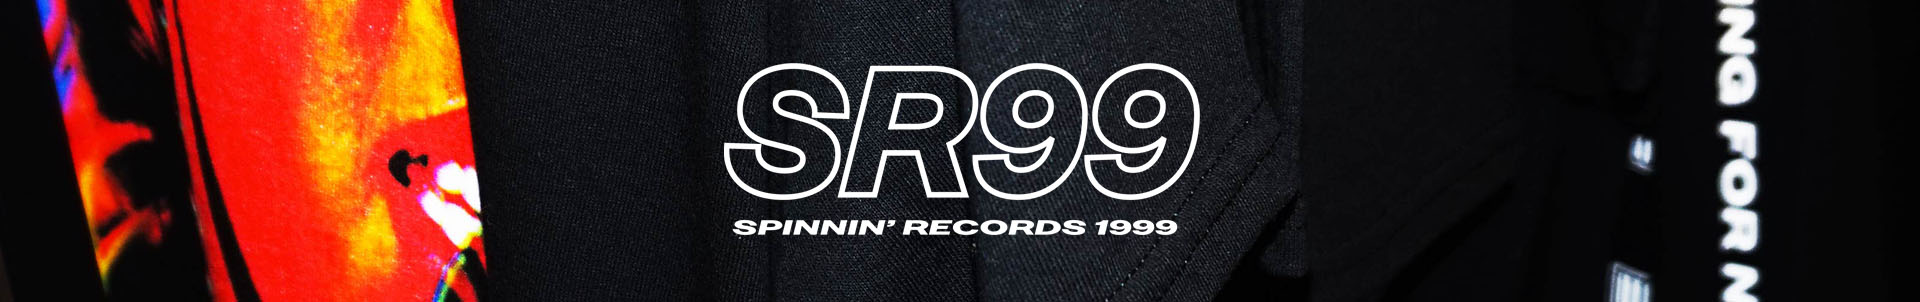 SR99 merchandise available now!